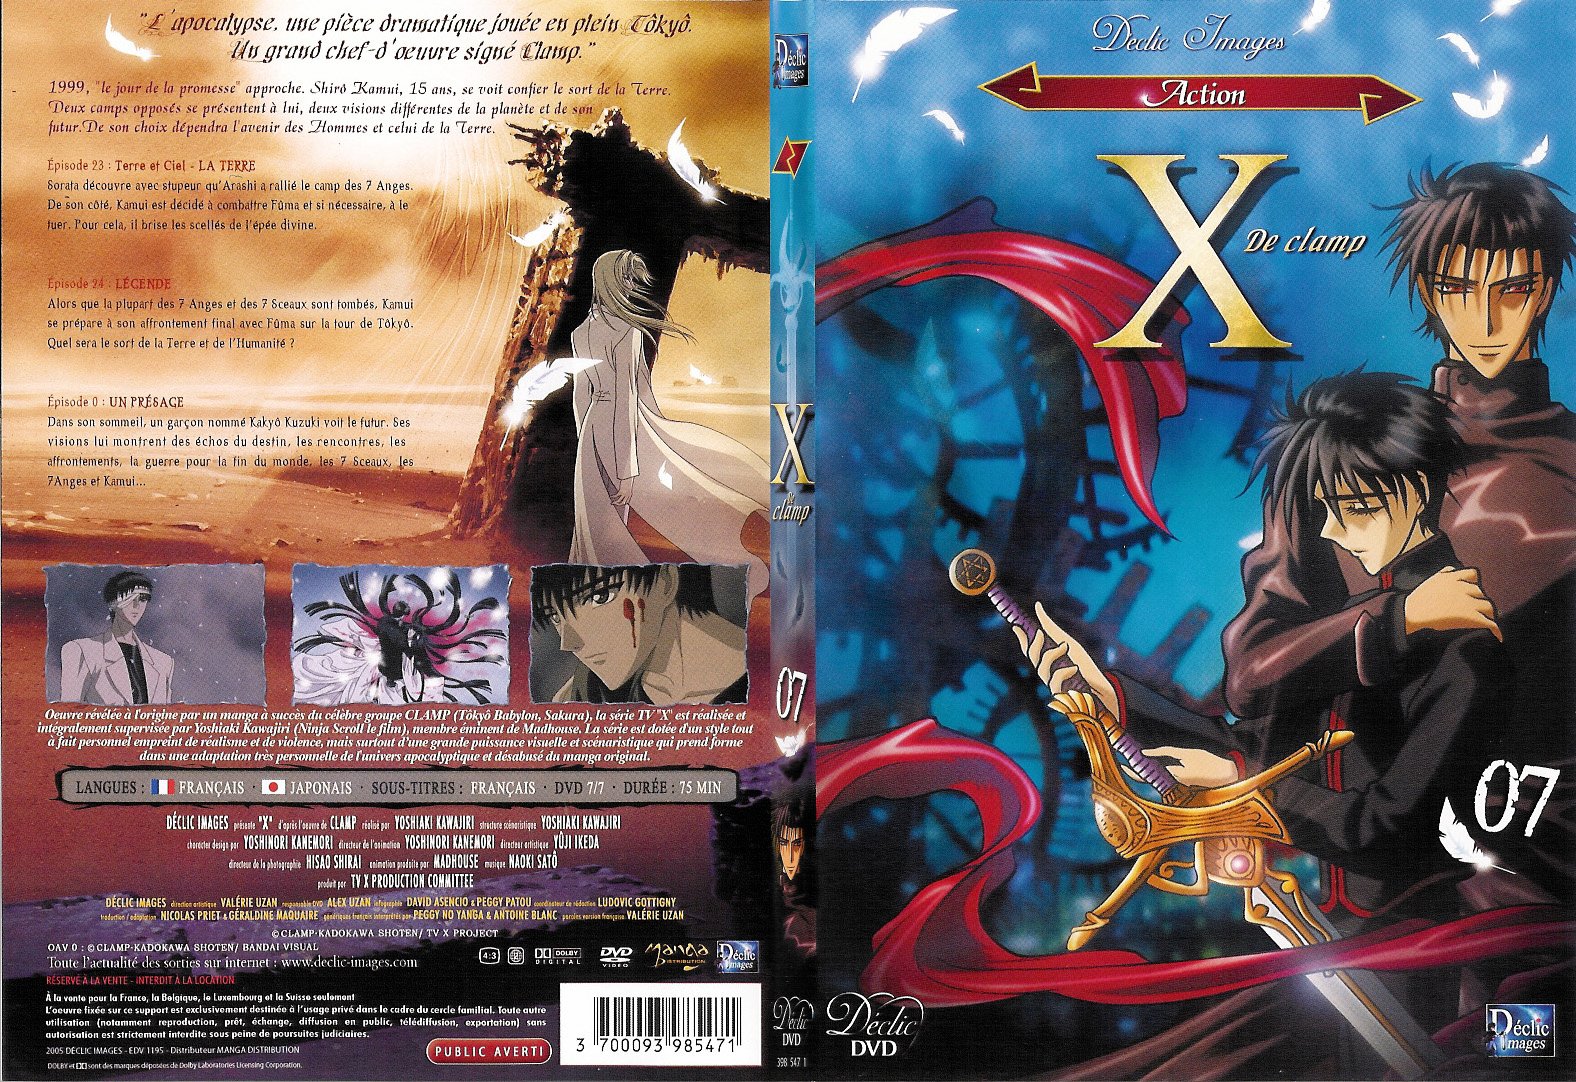 Jaquette DVD X de clamp vol 7 - SLIM